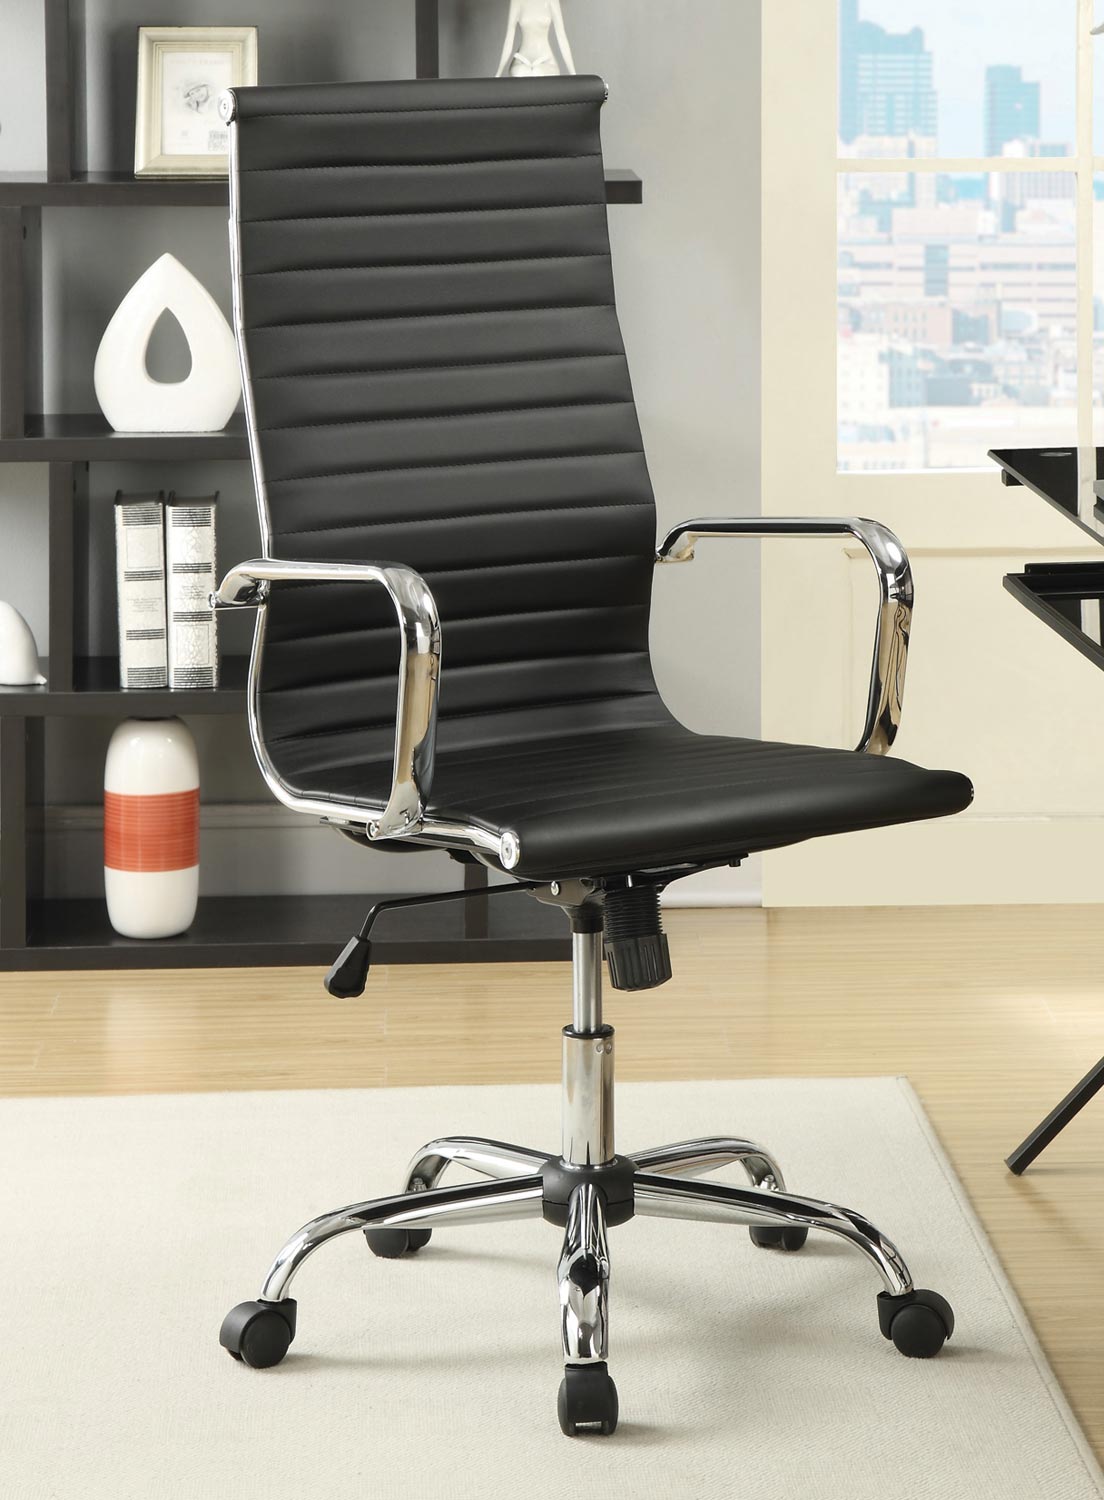 Coaster 800175 Office Chair - Black